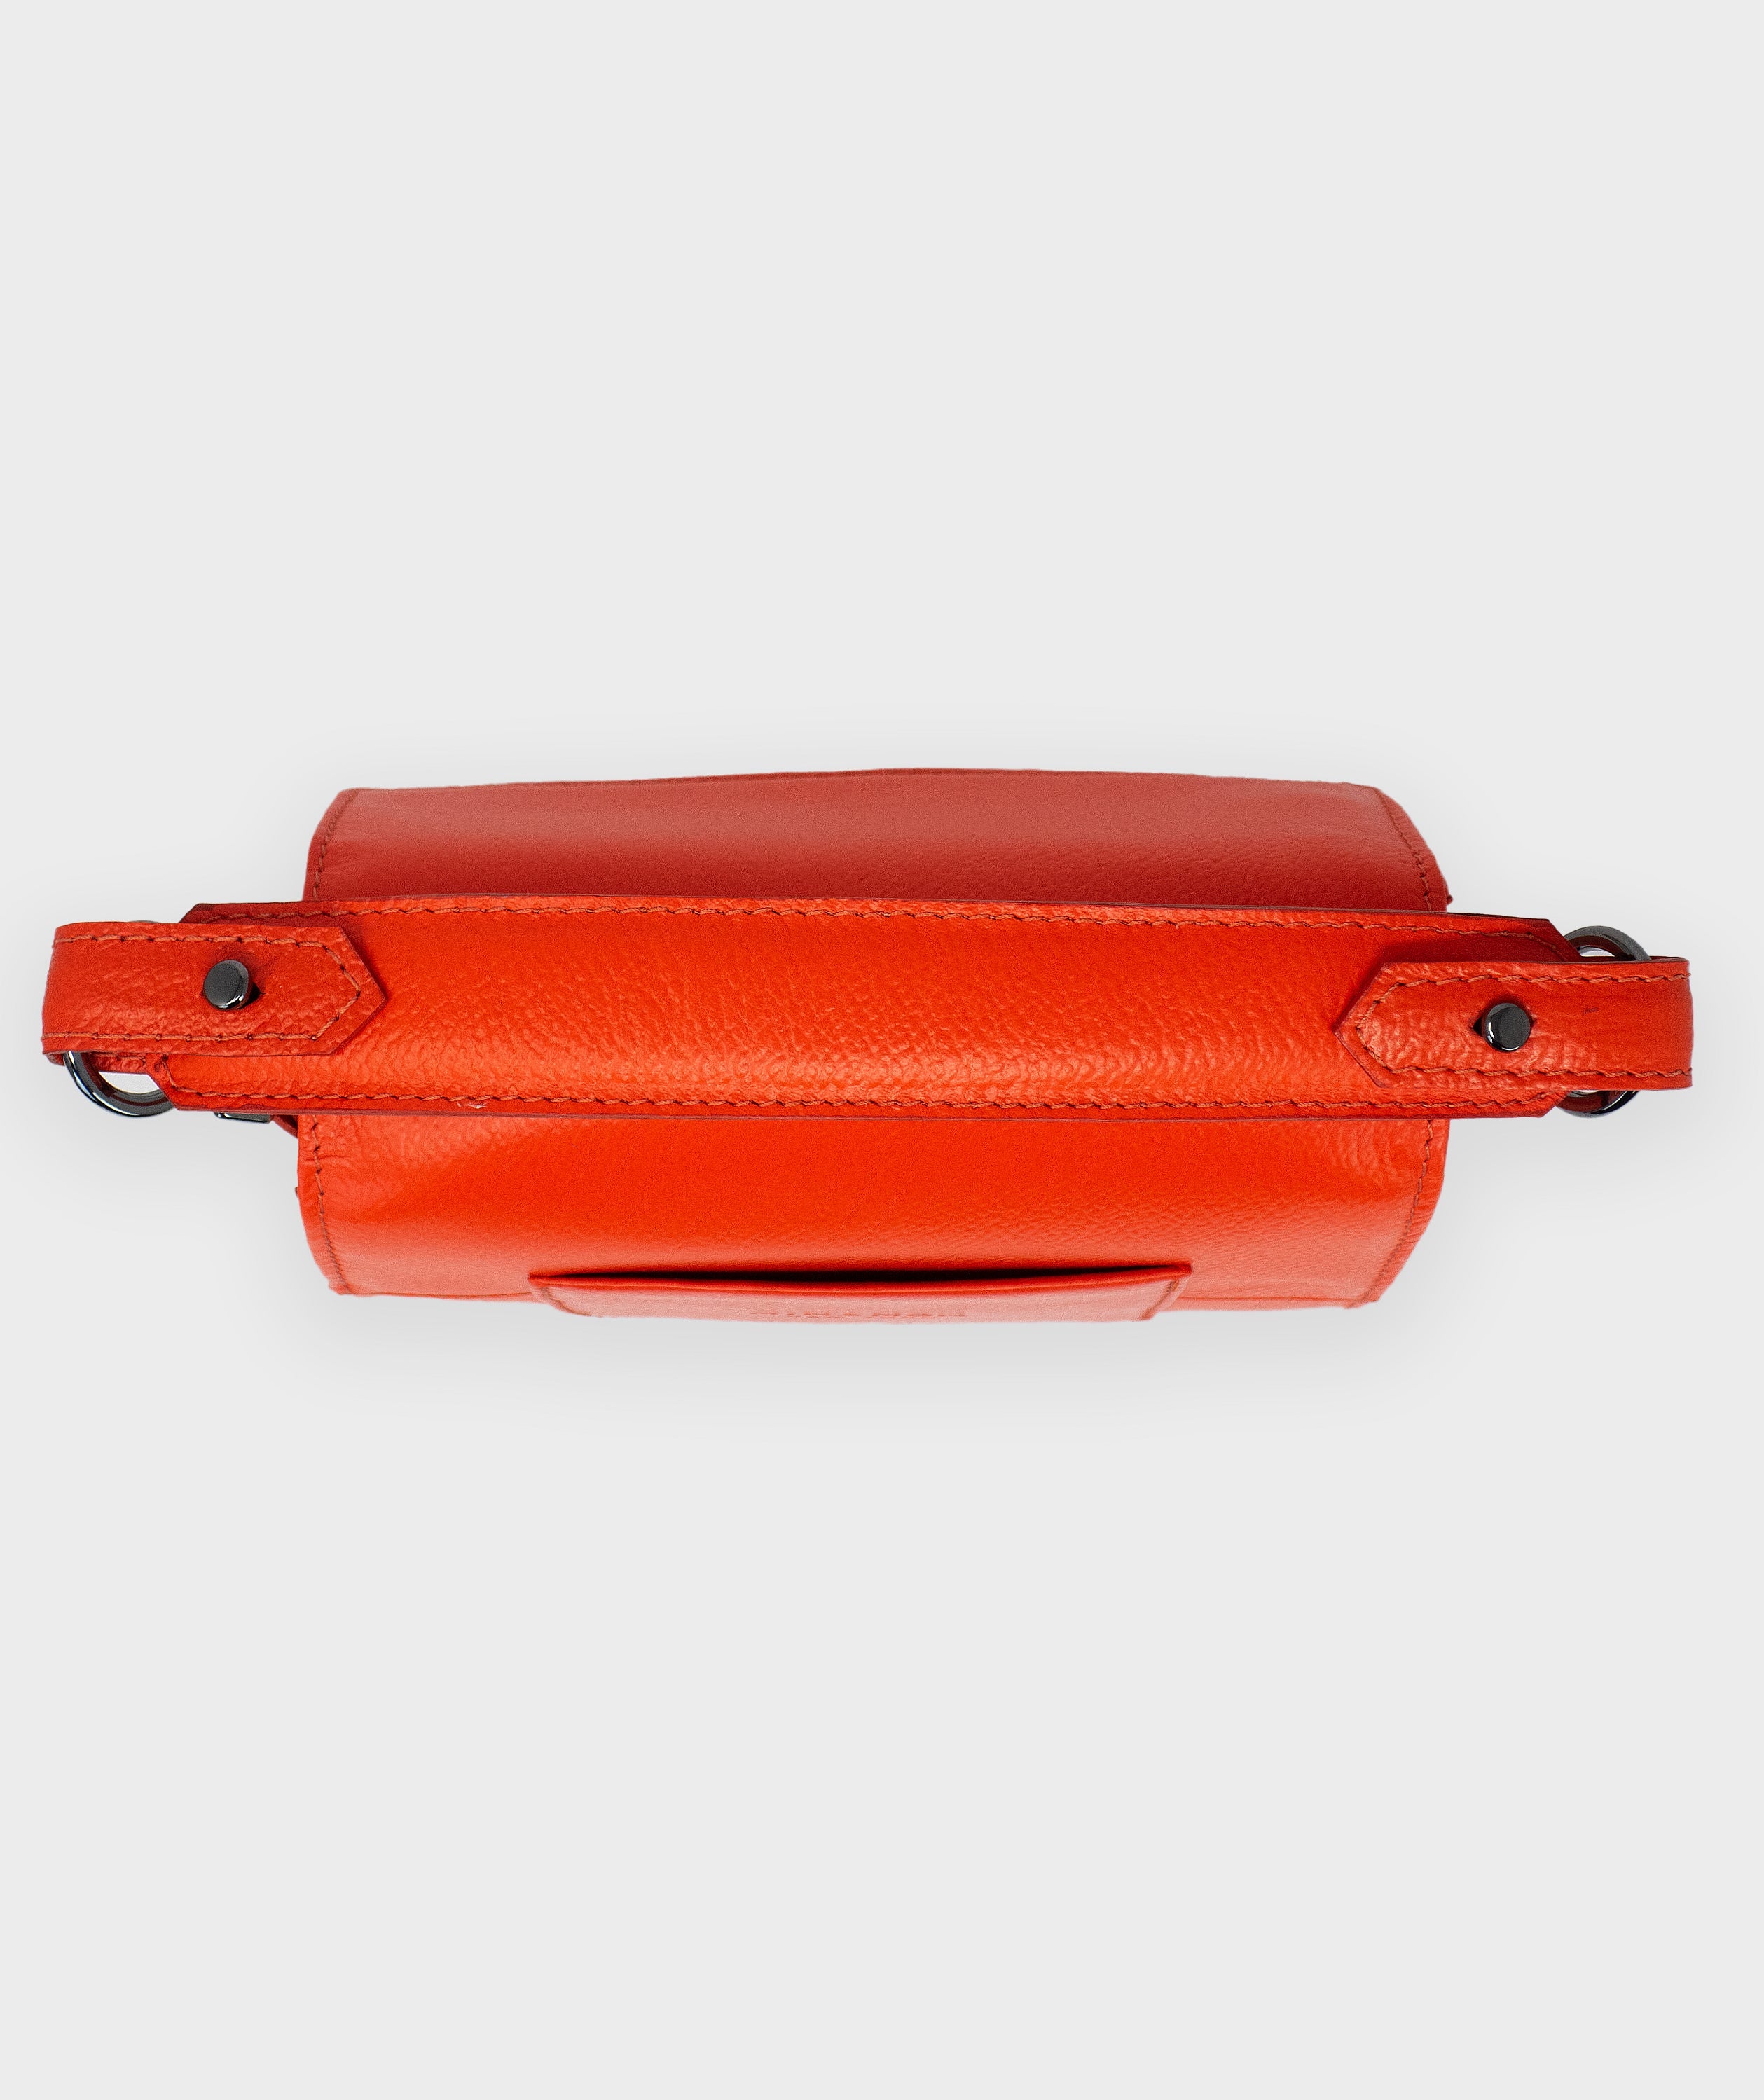 Anastasio Crossbody Handbag - Micro - Fiesta red - All over eyes Print - Top view